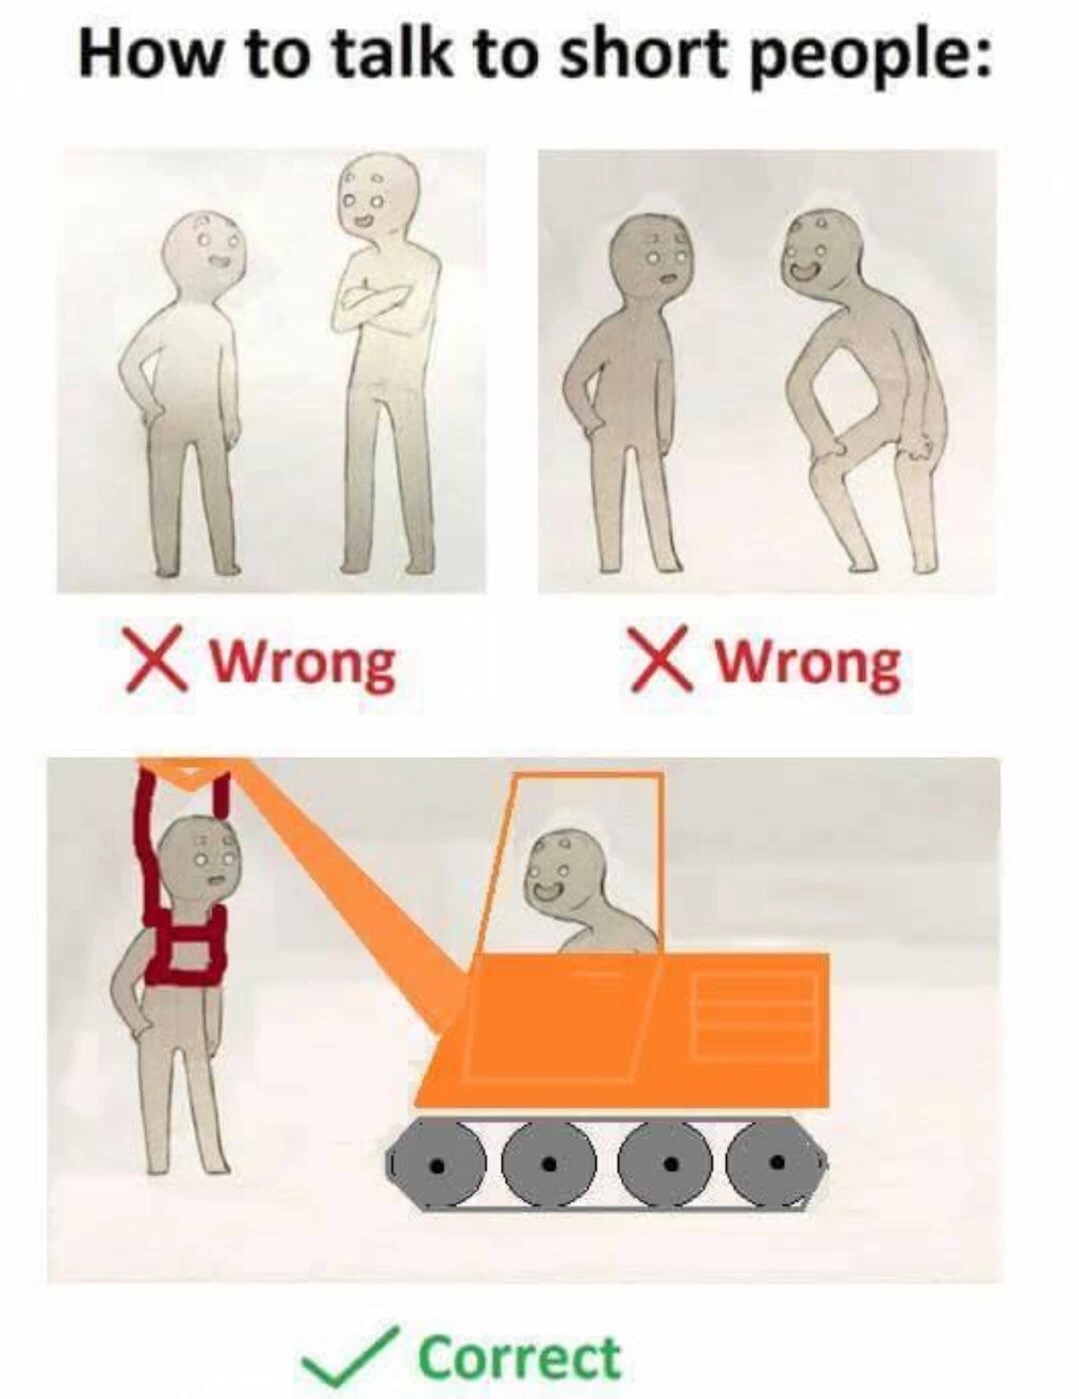 meme stream - talk to short person meme crane - How to talk to short people Do X Wrong X Wrong Correct